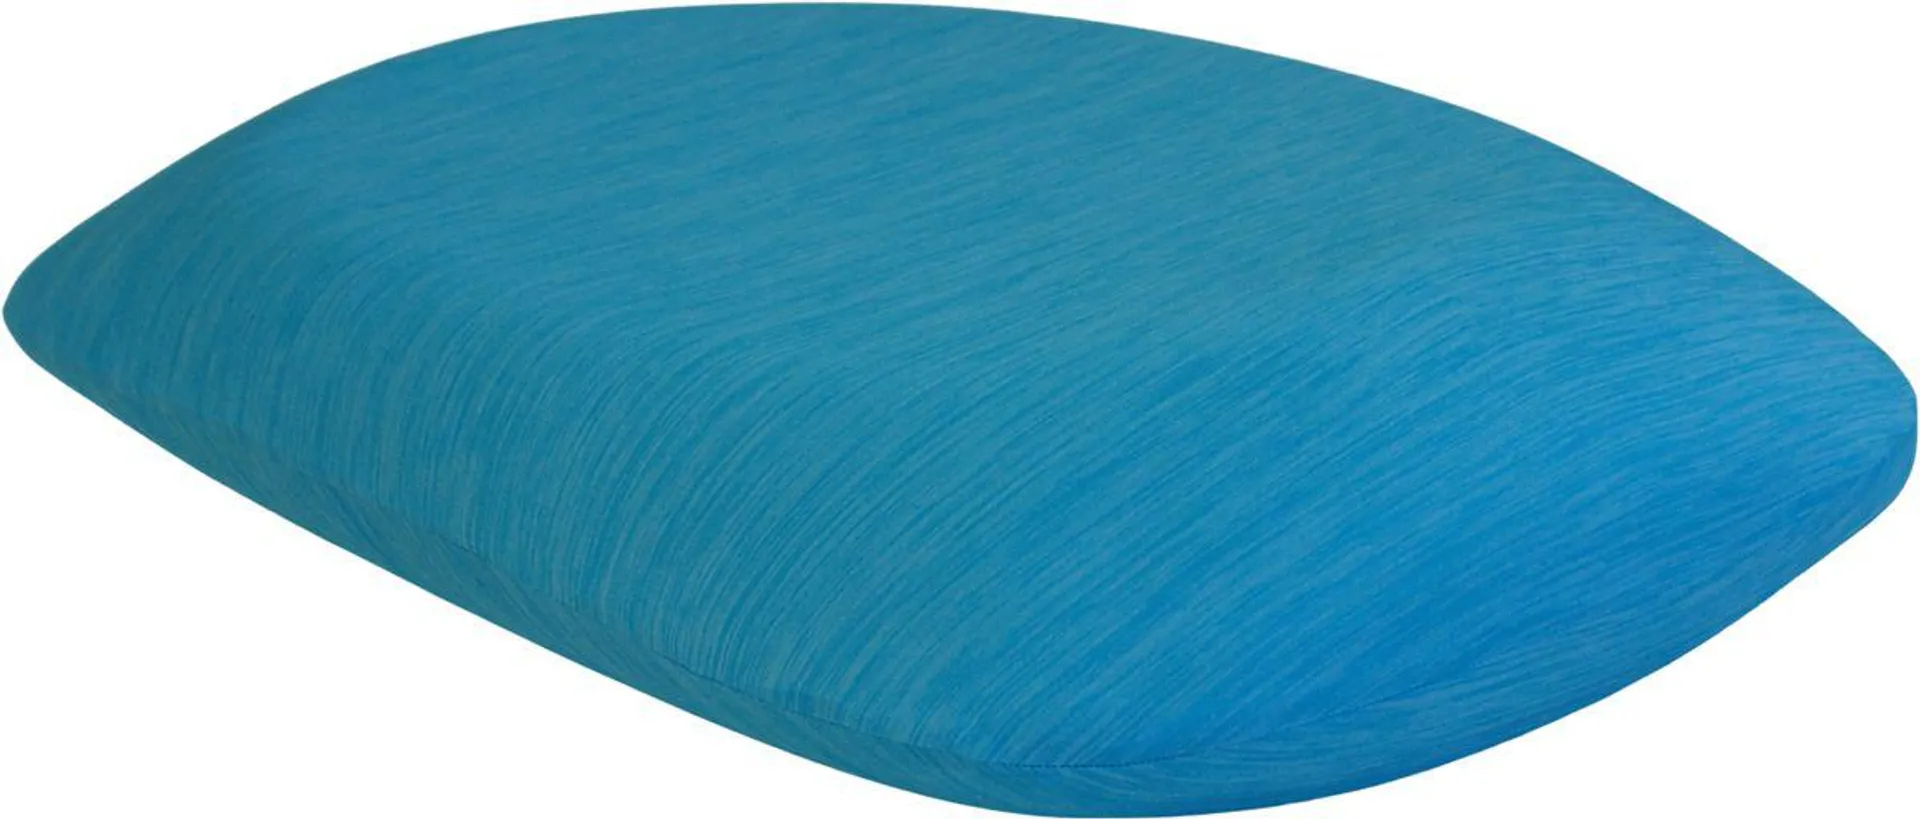 Love My Pillow Vibrance Aqua Blue